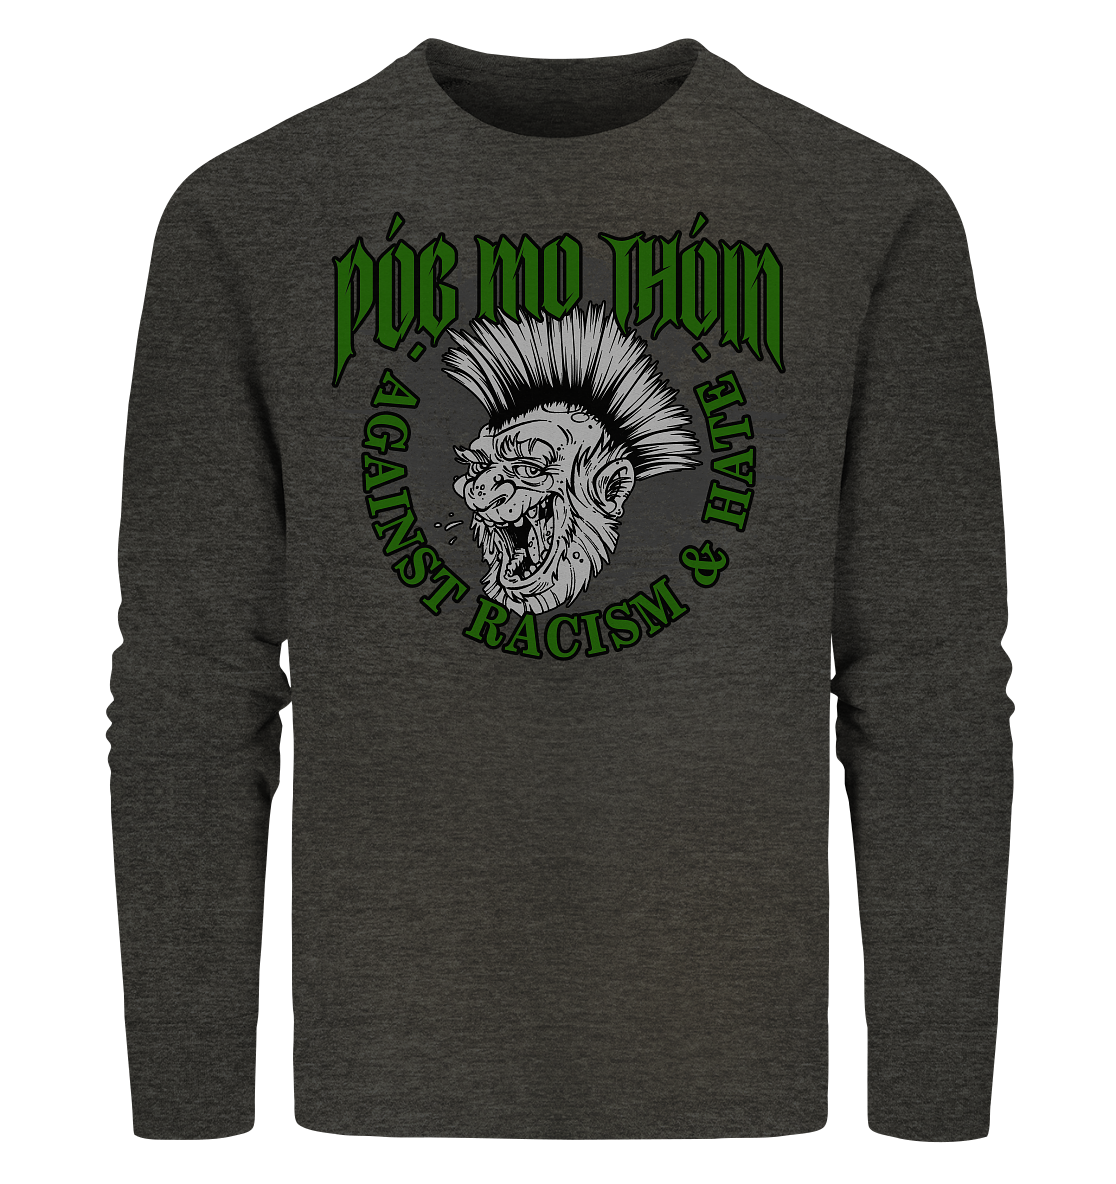 Póg Mo Thóin Streetwear "Against Racism & Hate" - Organic Sweatshirt